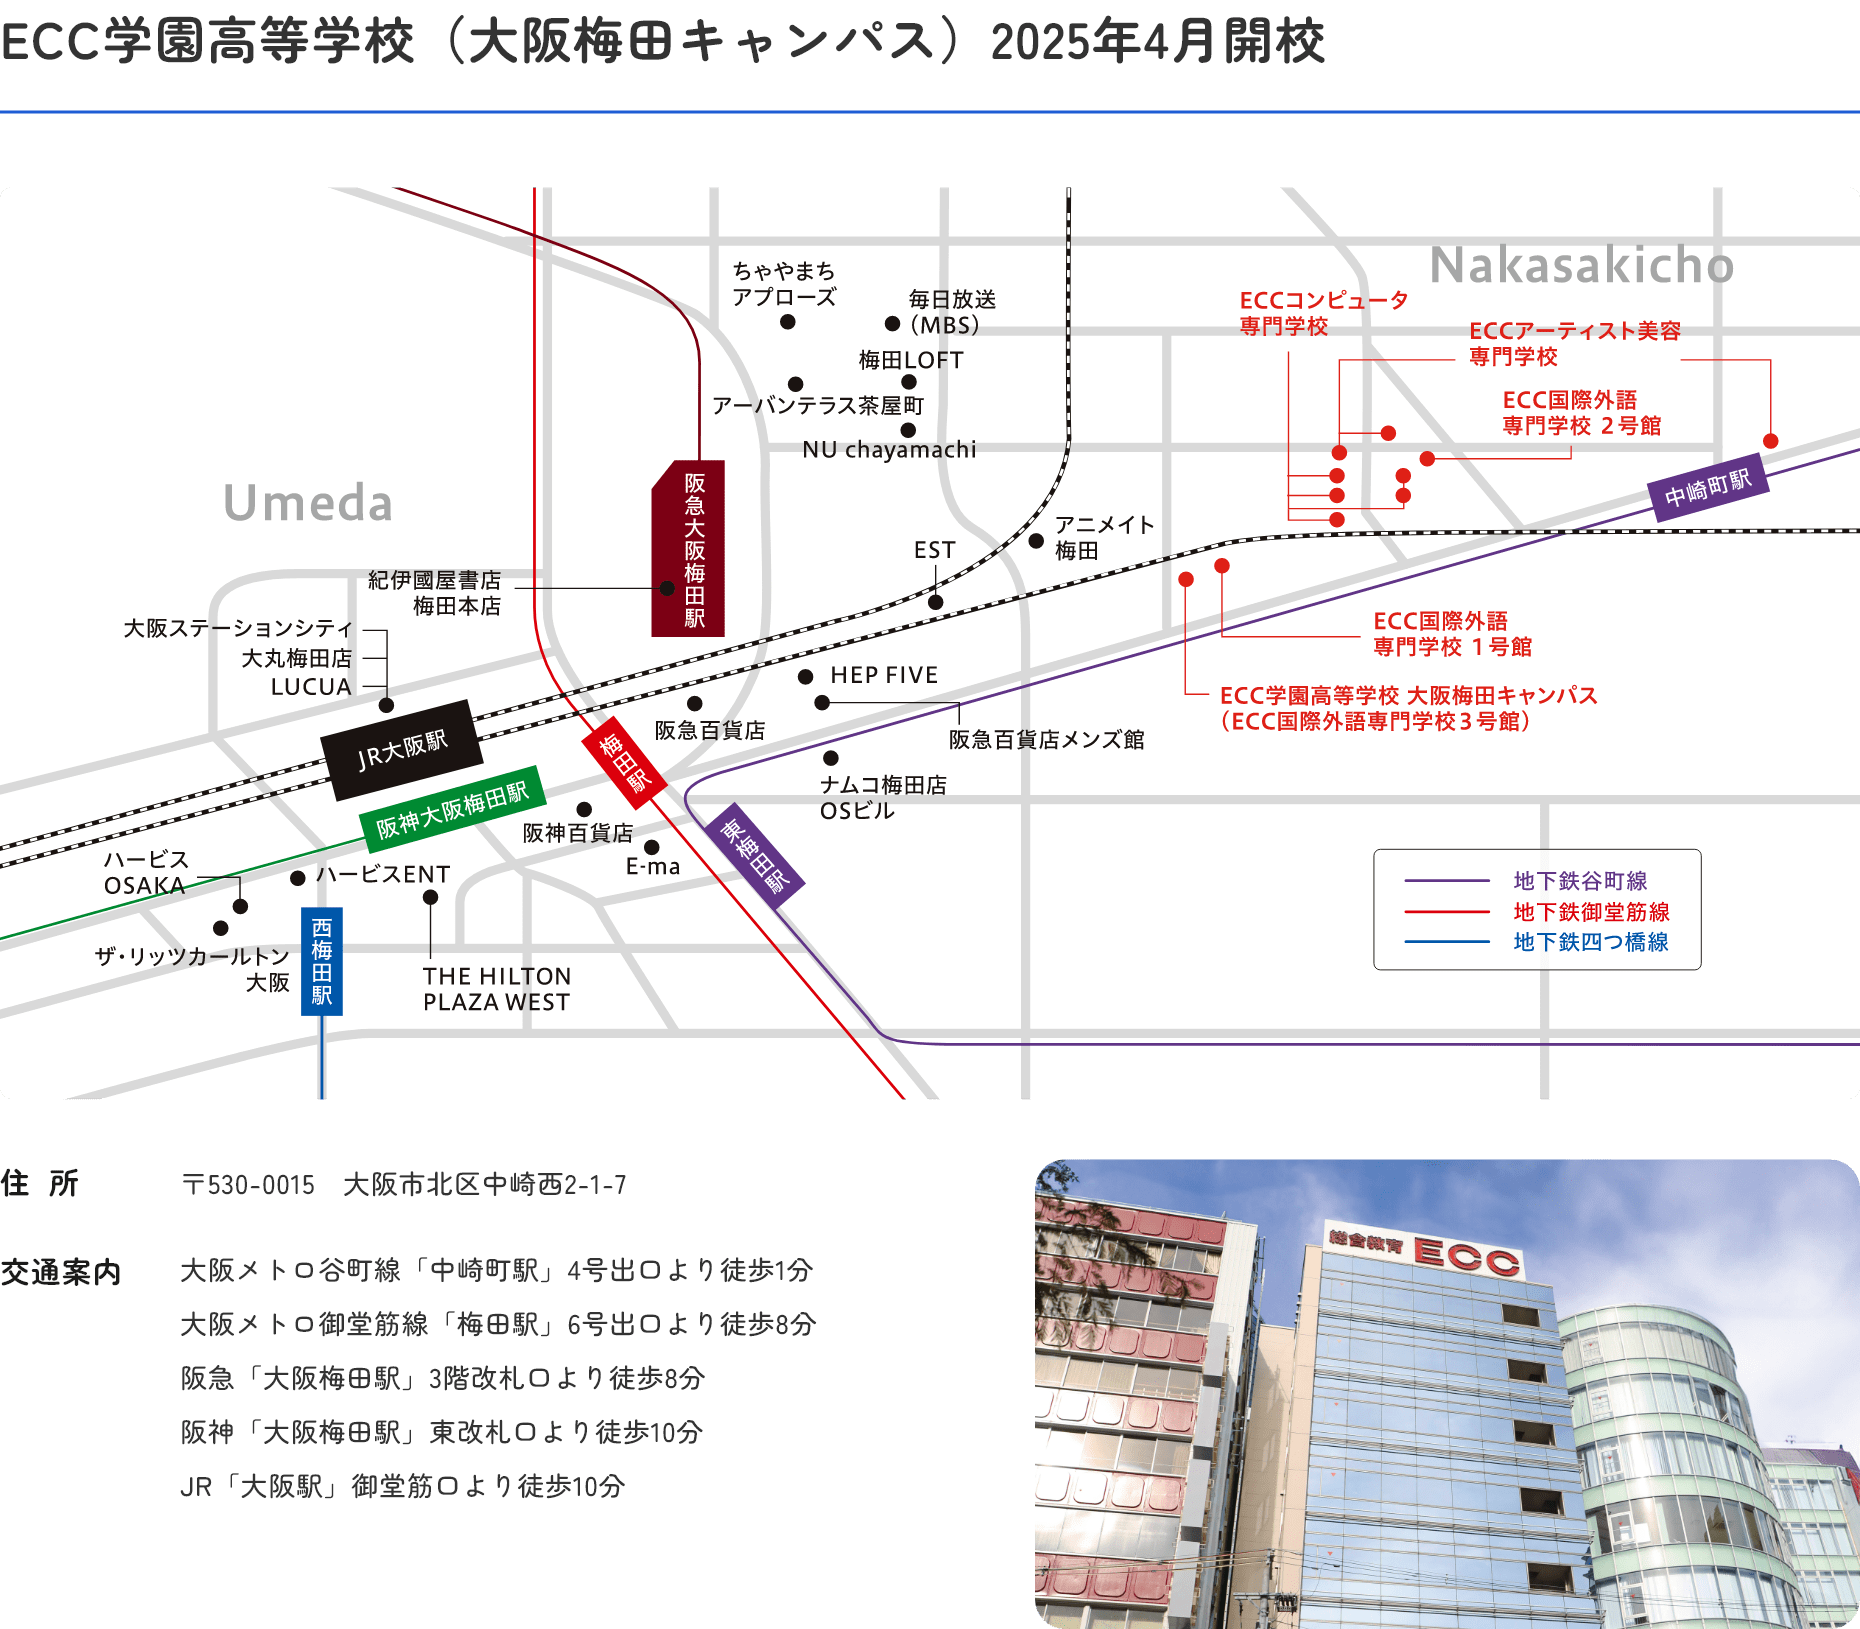 ECC学園高等学校（大阪梅田キャンパス）2025年4月開校